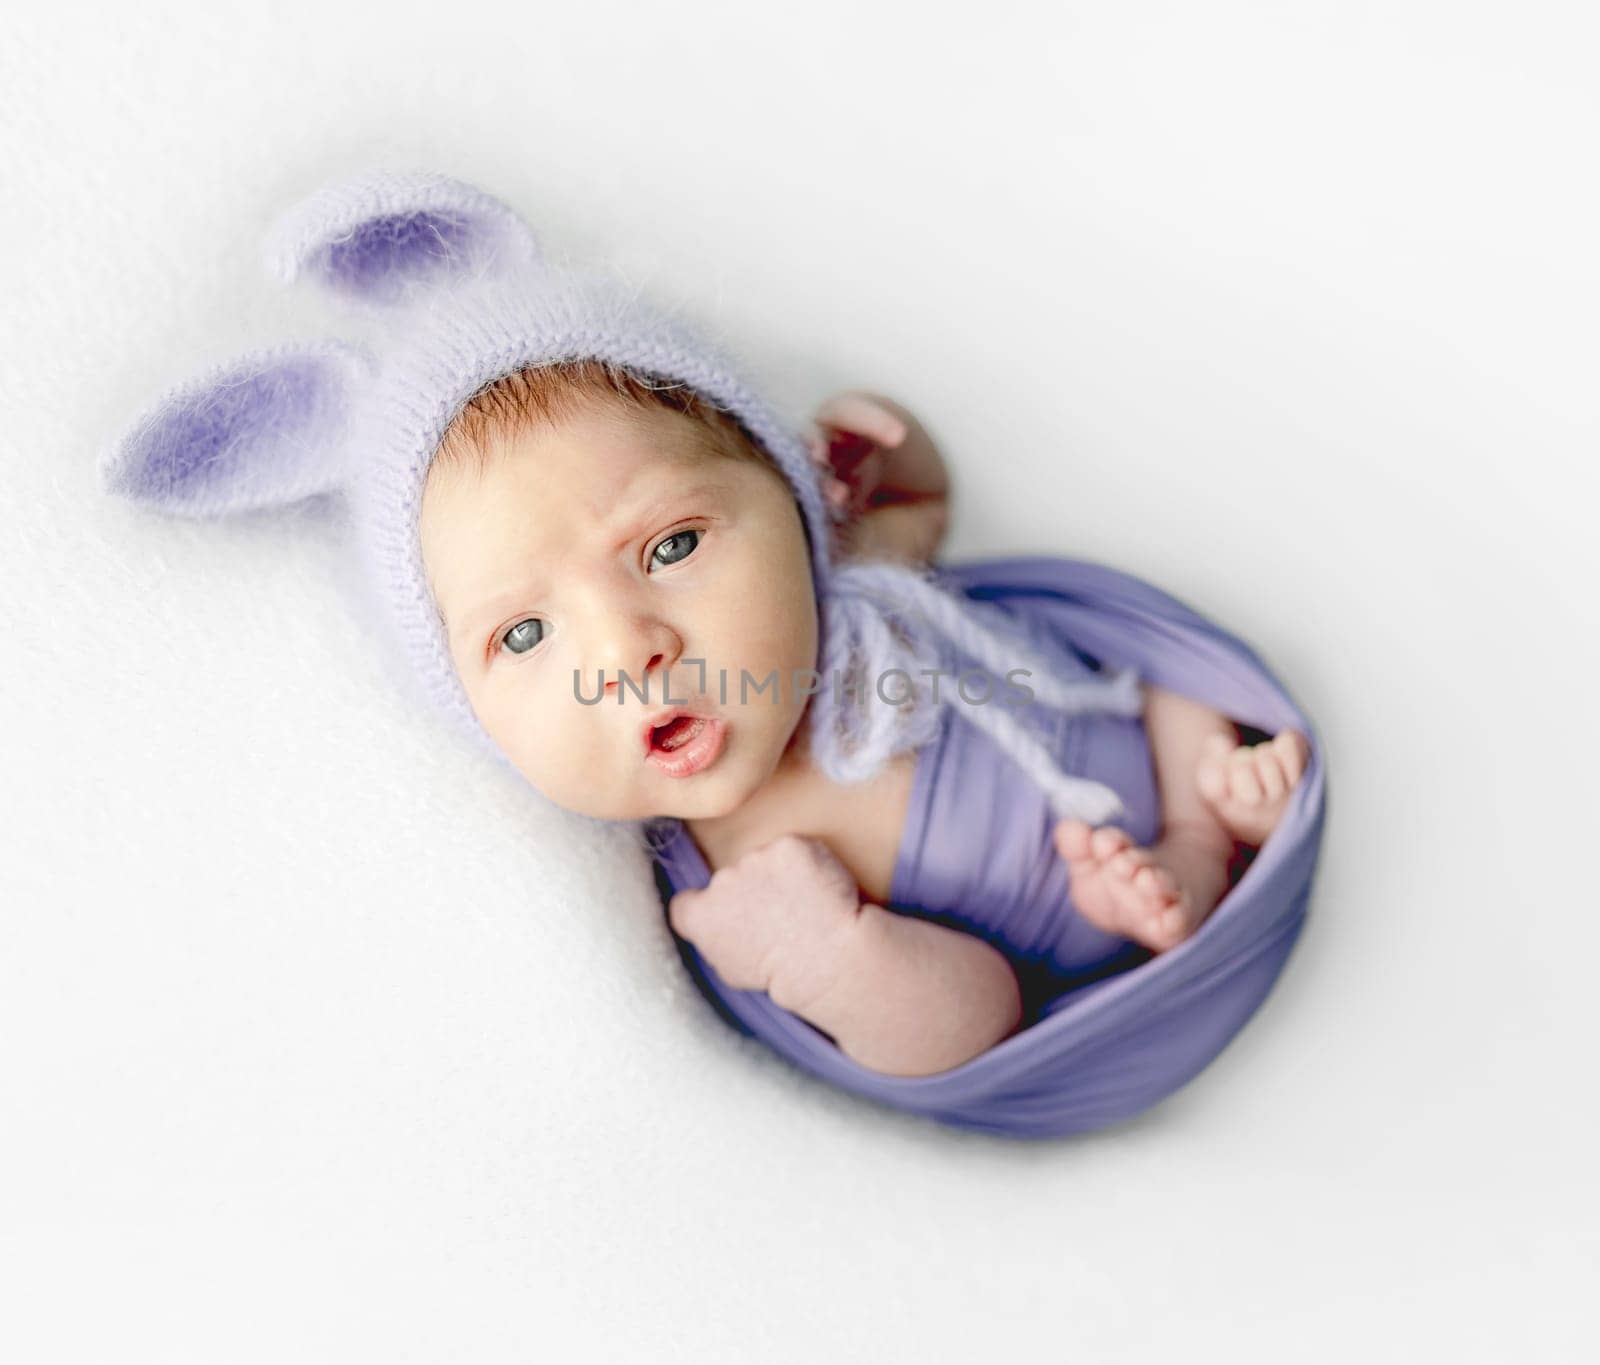 Newborn baby girl studio portrait by tan4ikk1